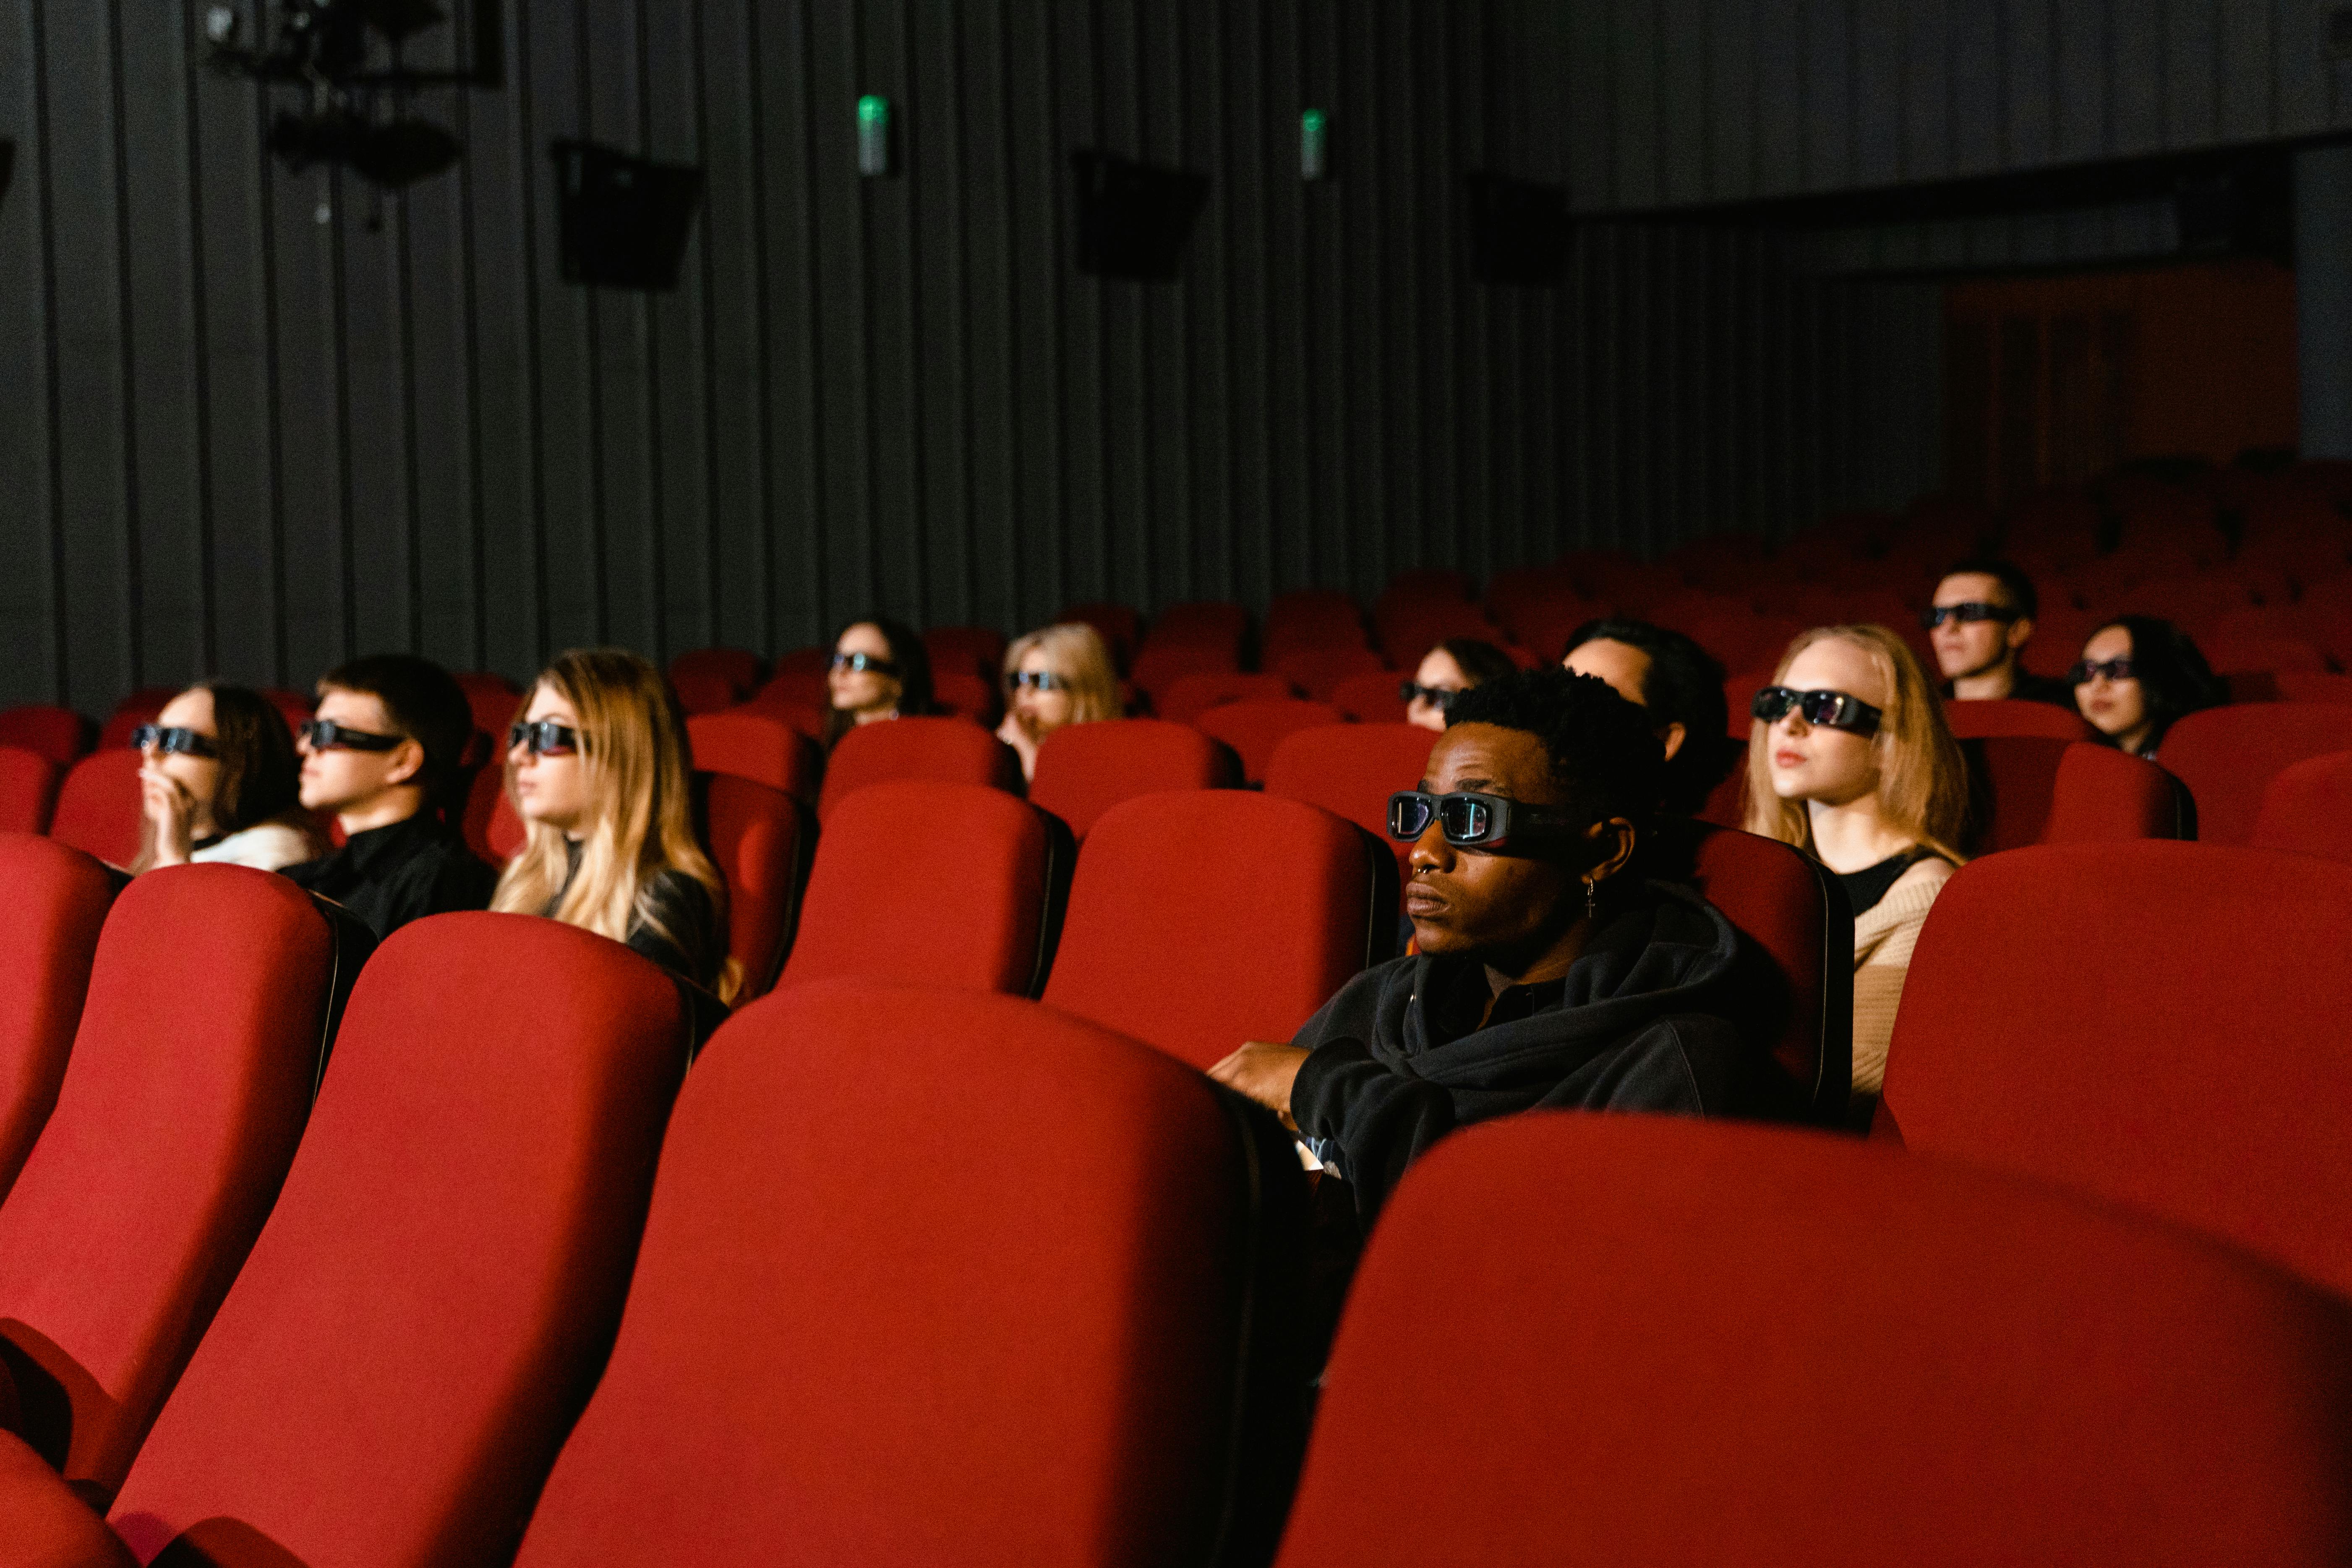 people watching movie while wearing